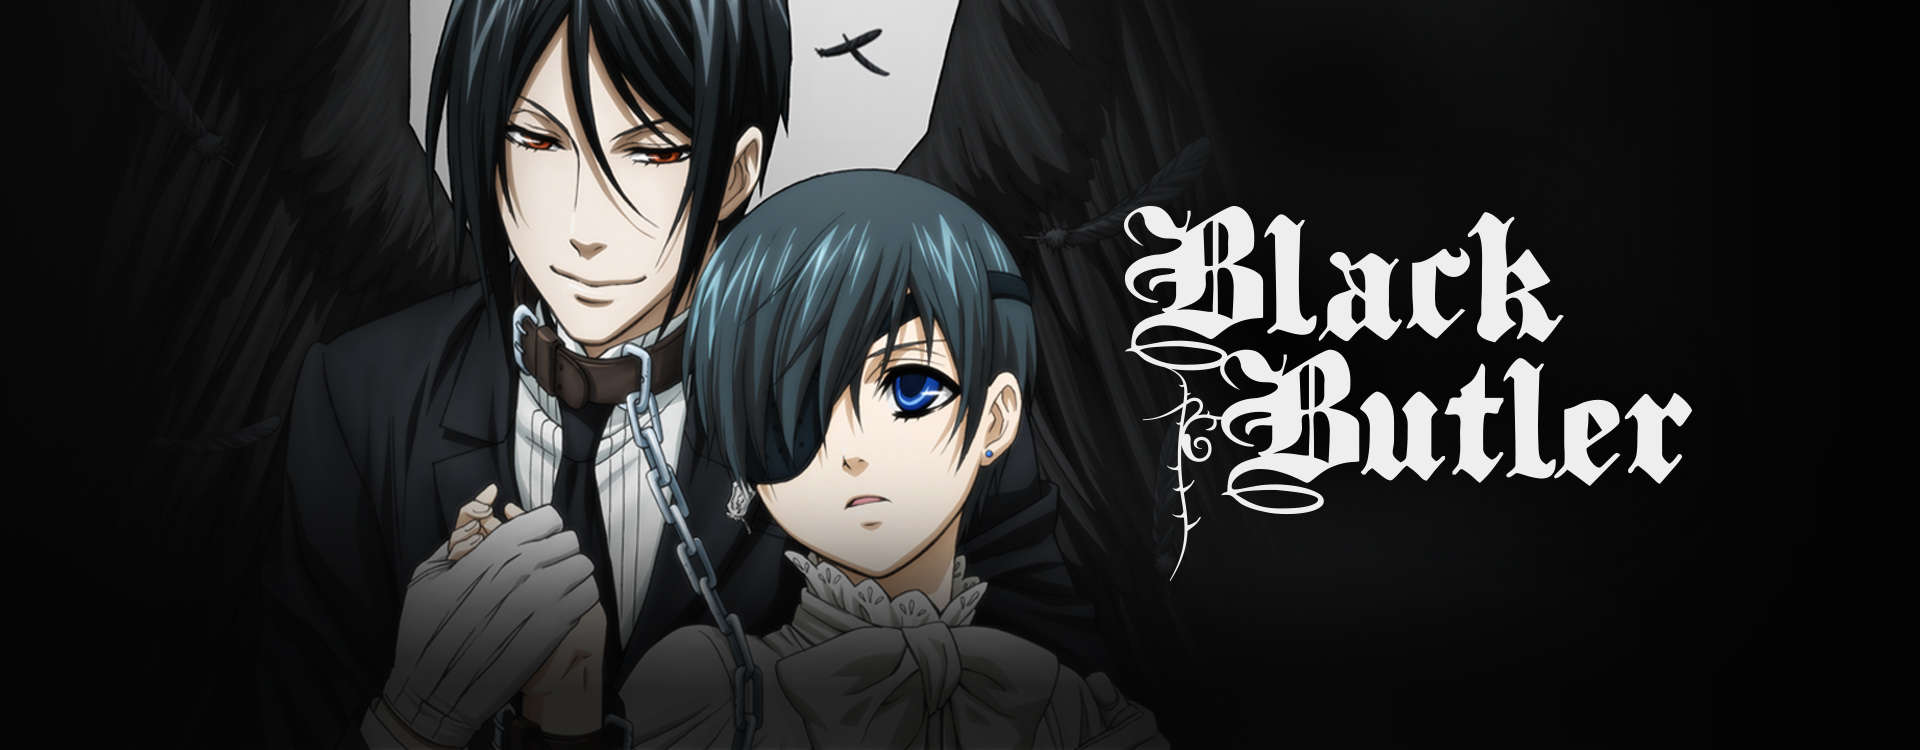 download anime black butler lengkap